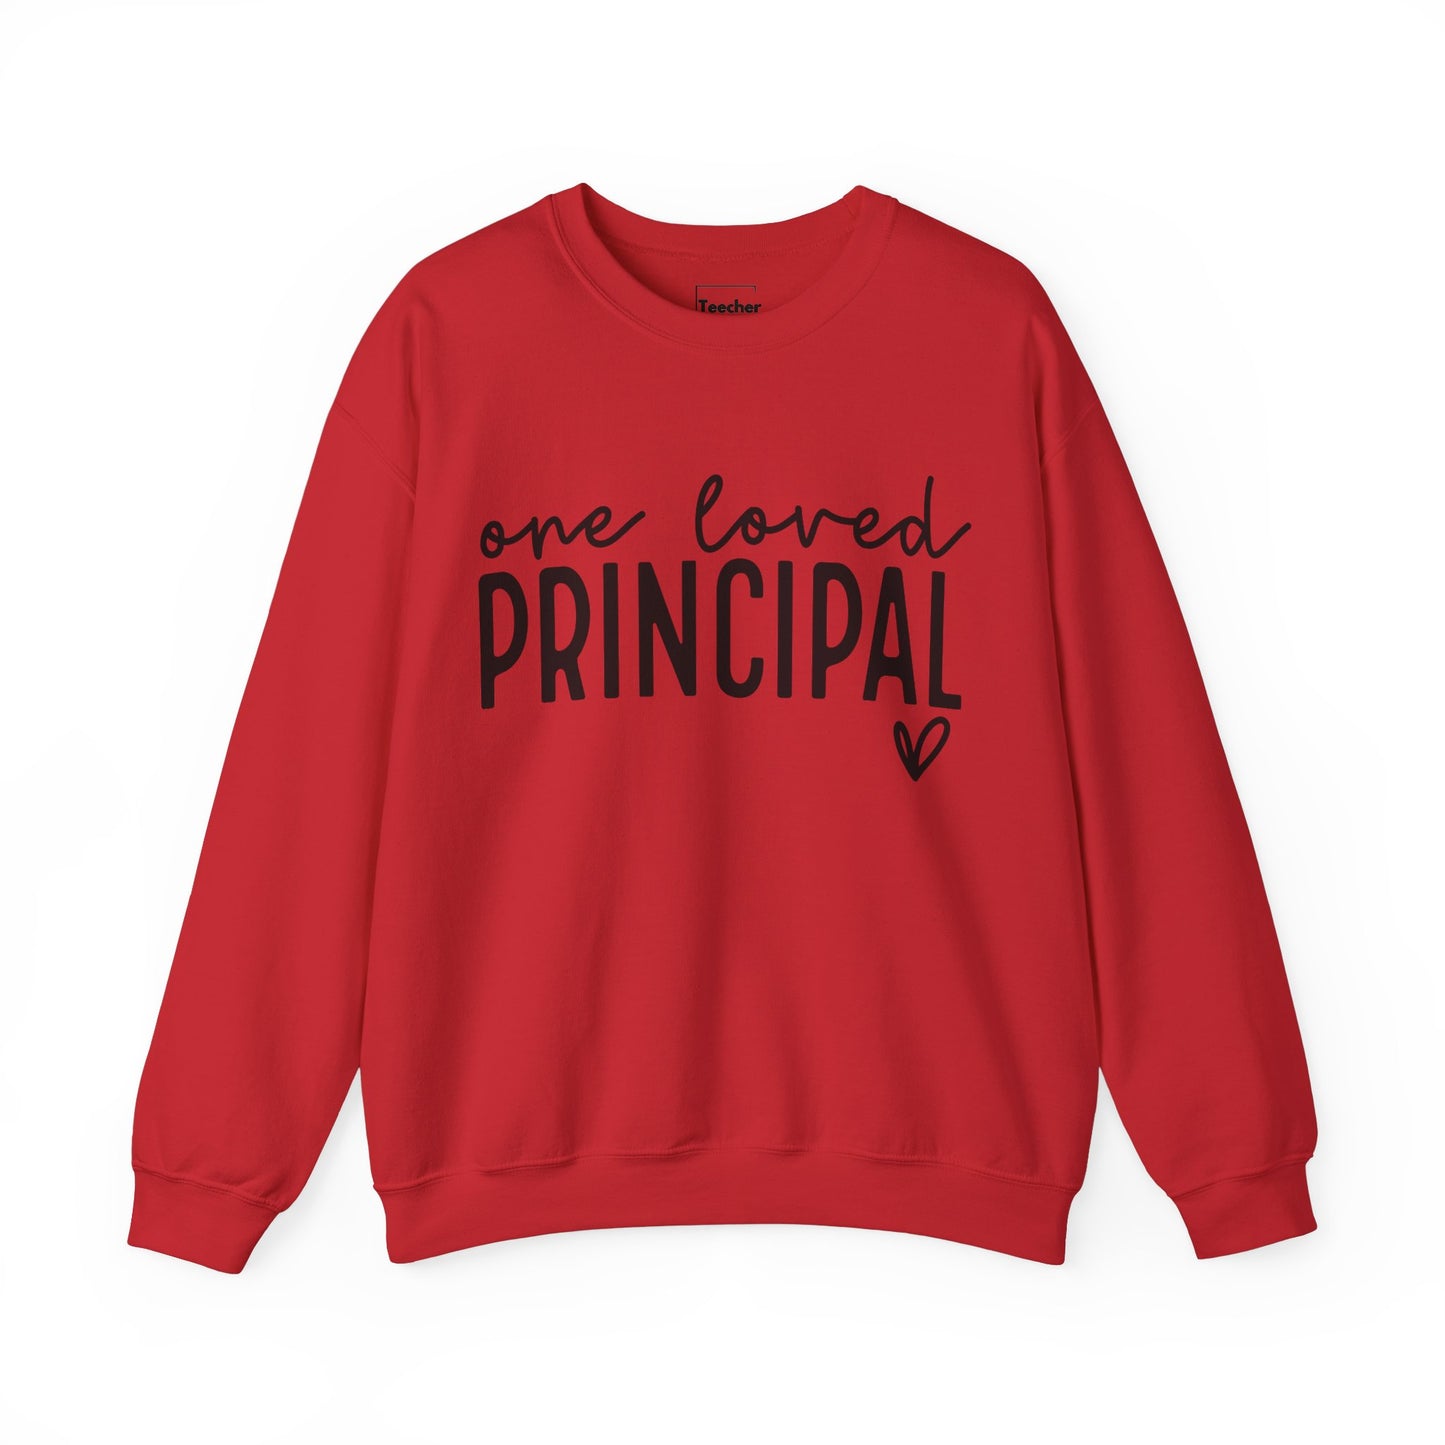 Loved Principal Sweatshirt